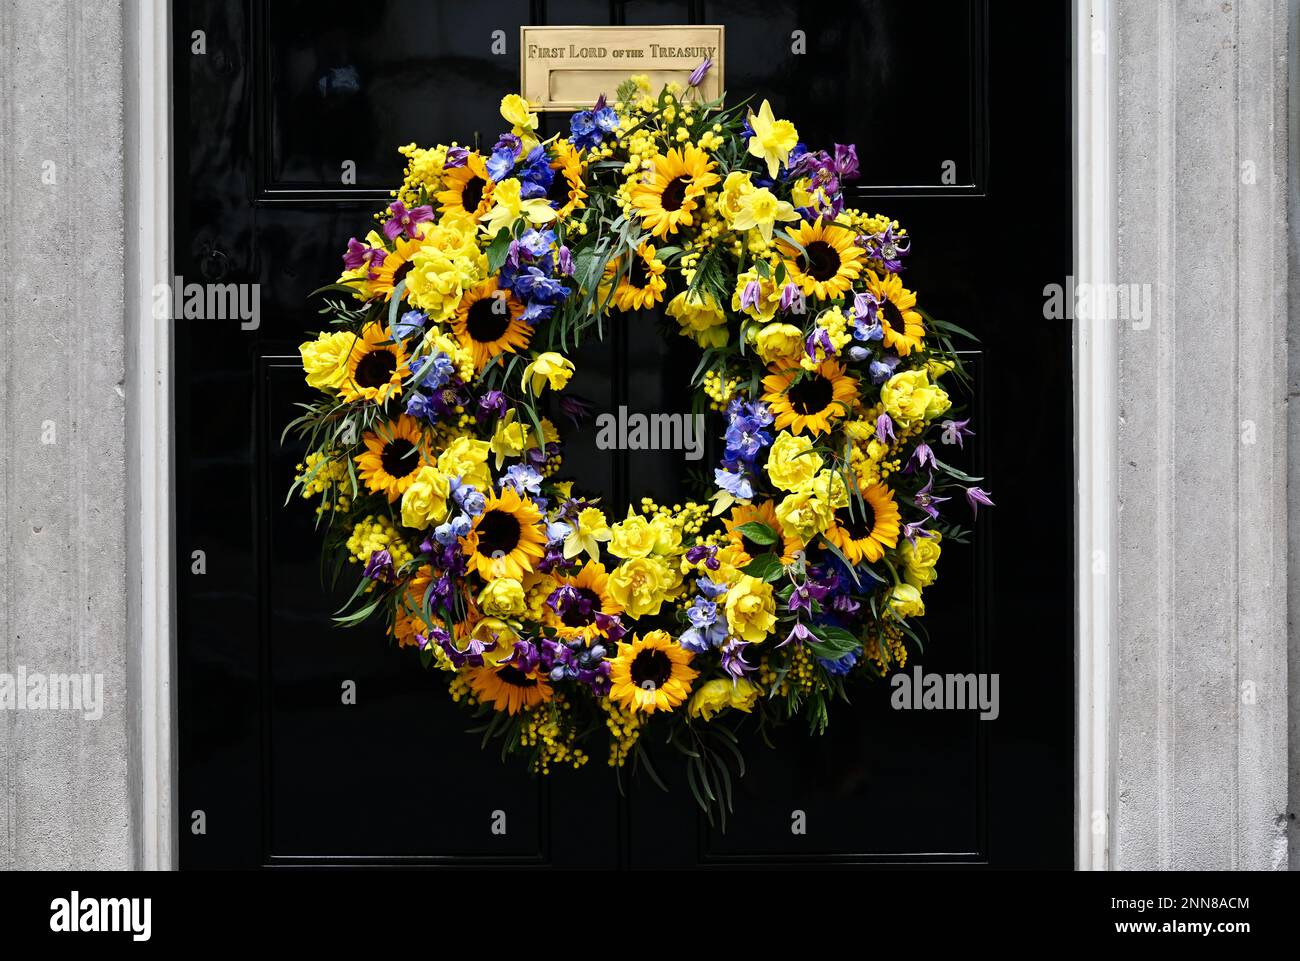 Ukrainian Sunflower Wreath hung on 10 Downing Street's door to mark the first anniversary of the Russian invasion of Ukraine. Downing Street, London, UK. Stock Photo